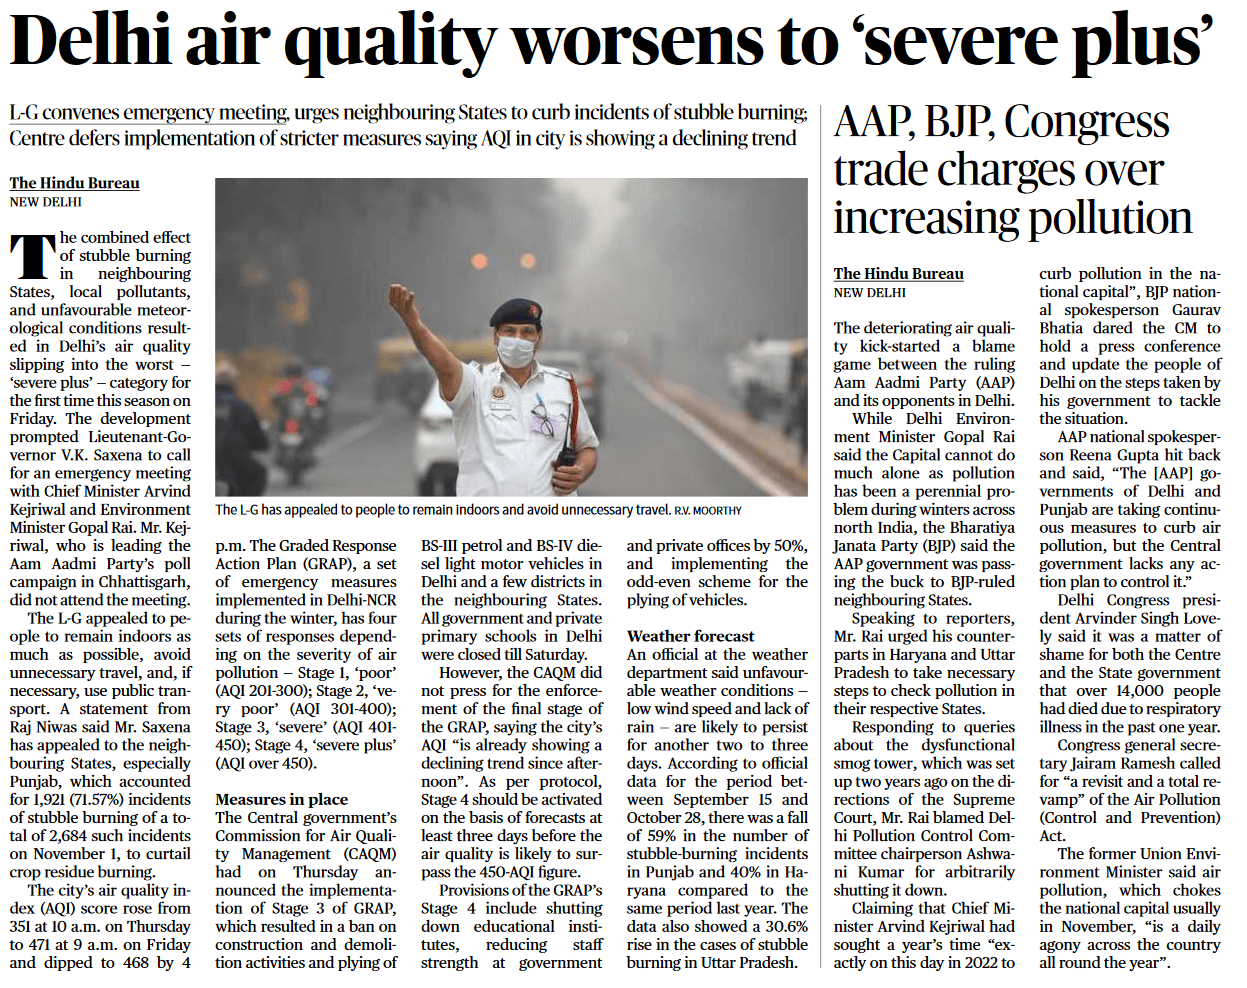  Delhi Air Quality - Page No.4 , GS 3 